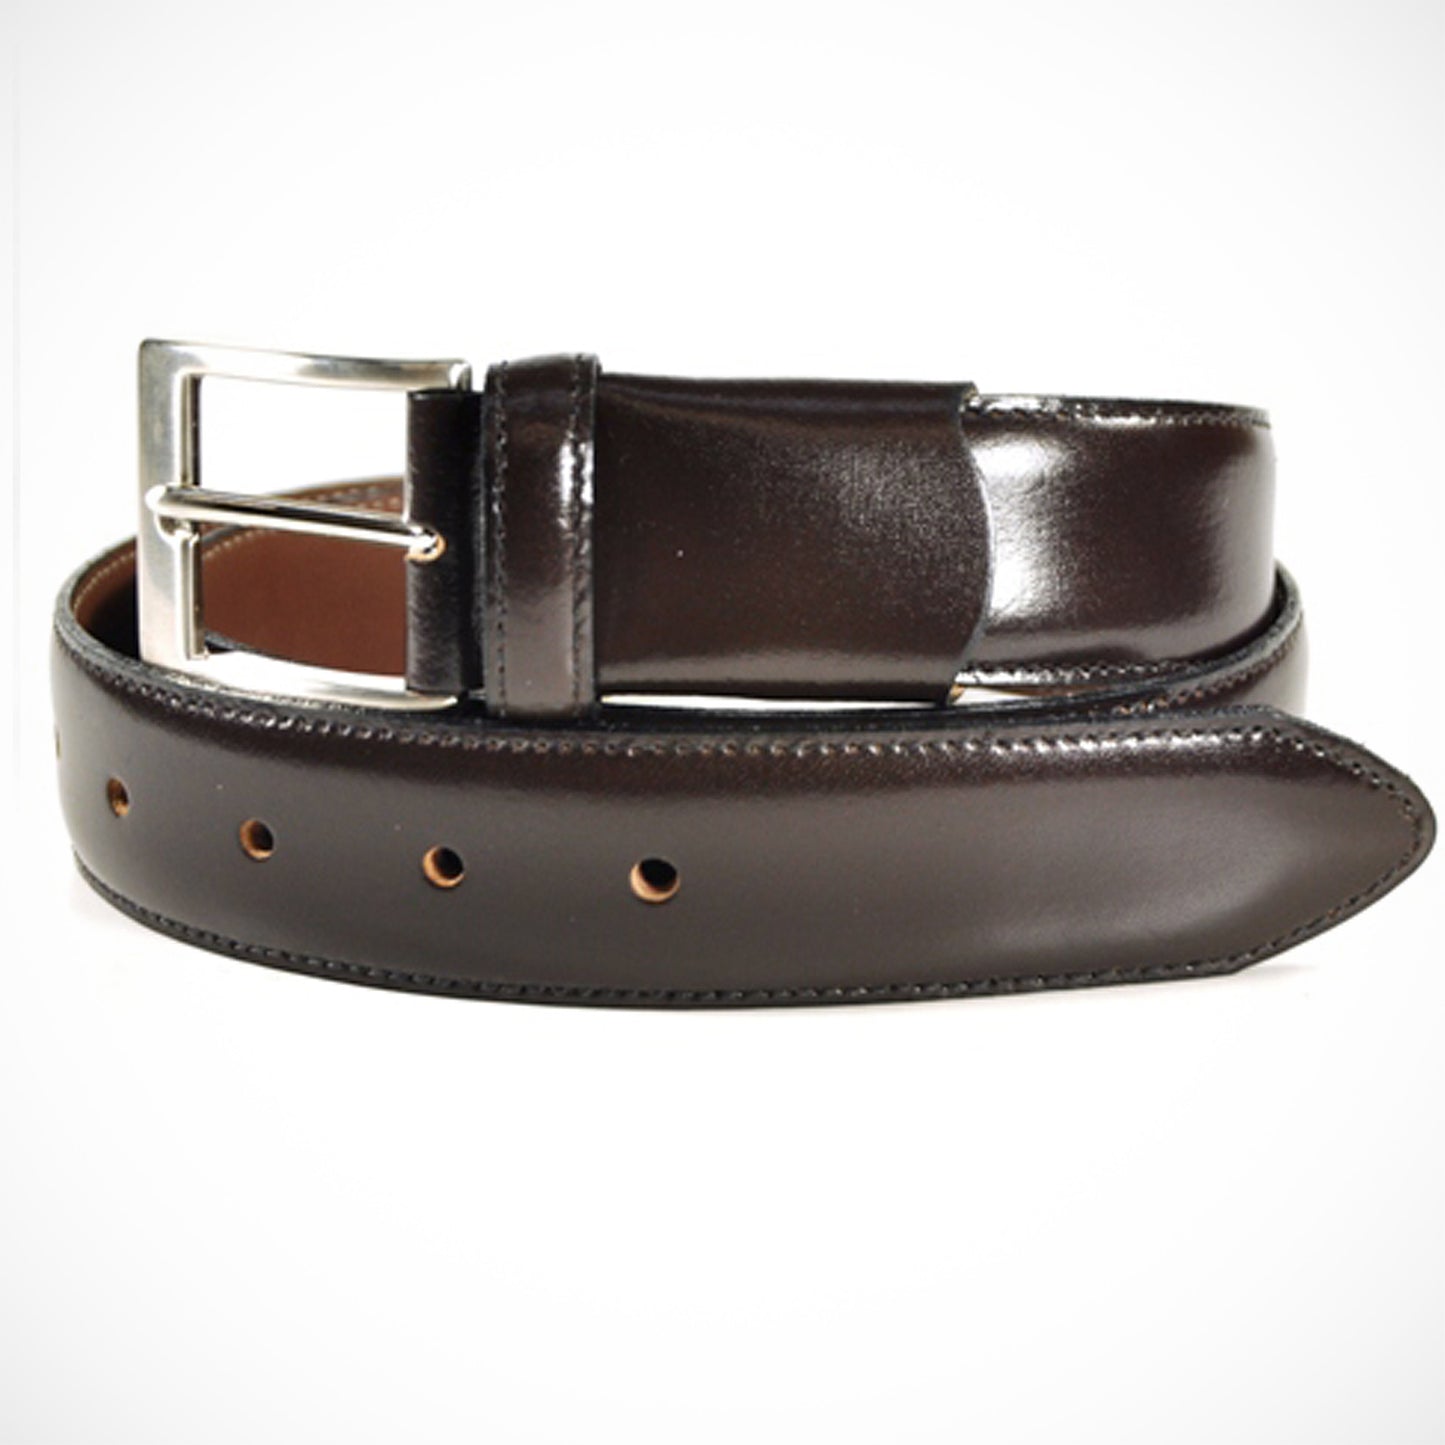 'Basic Brown' Belt